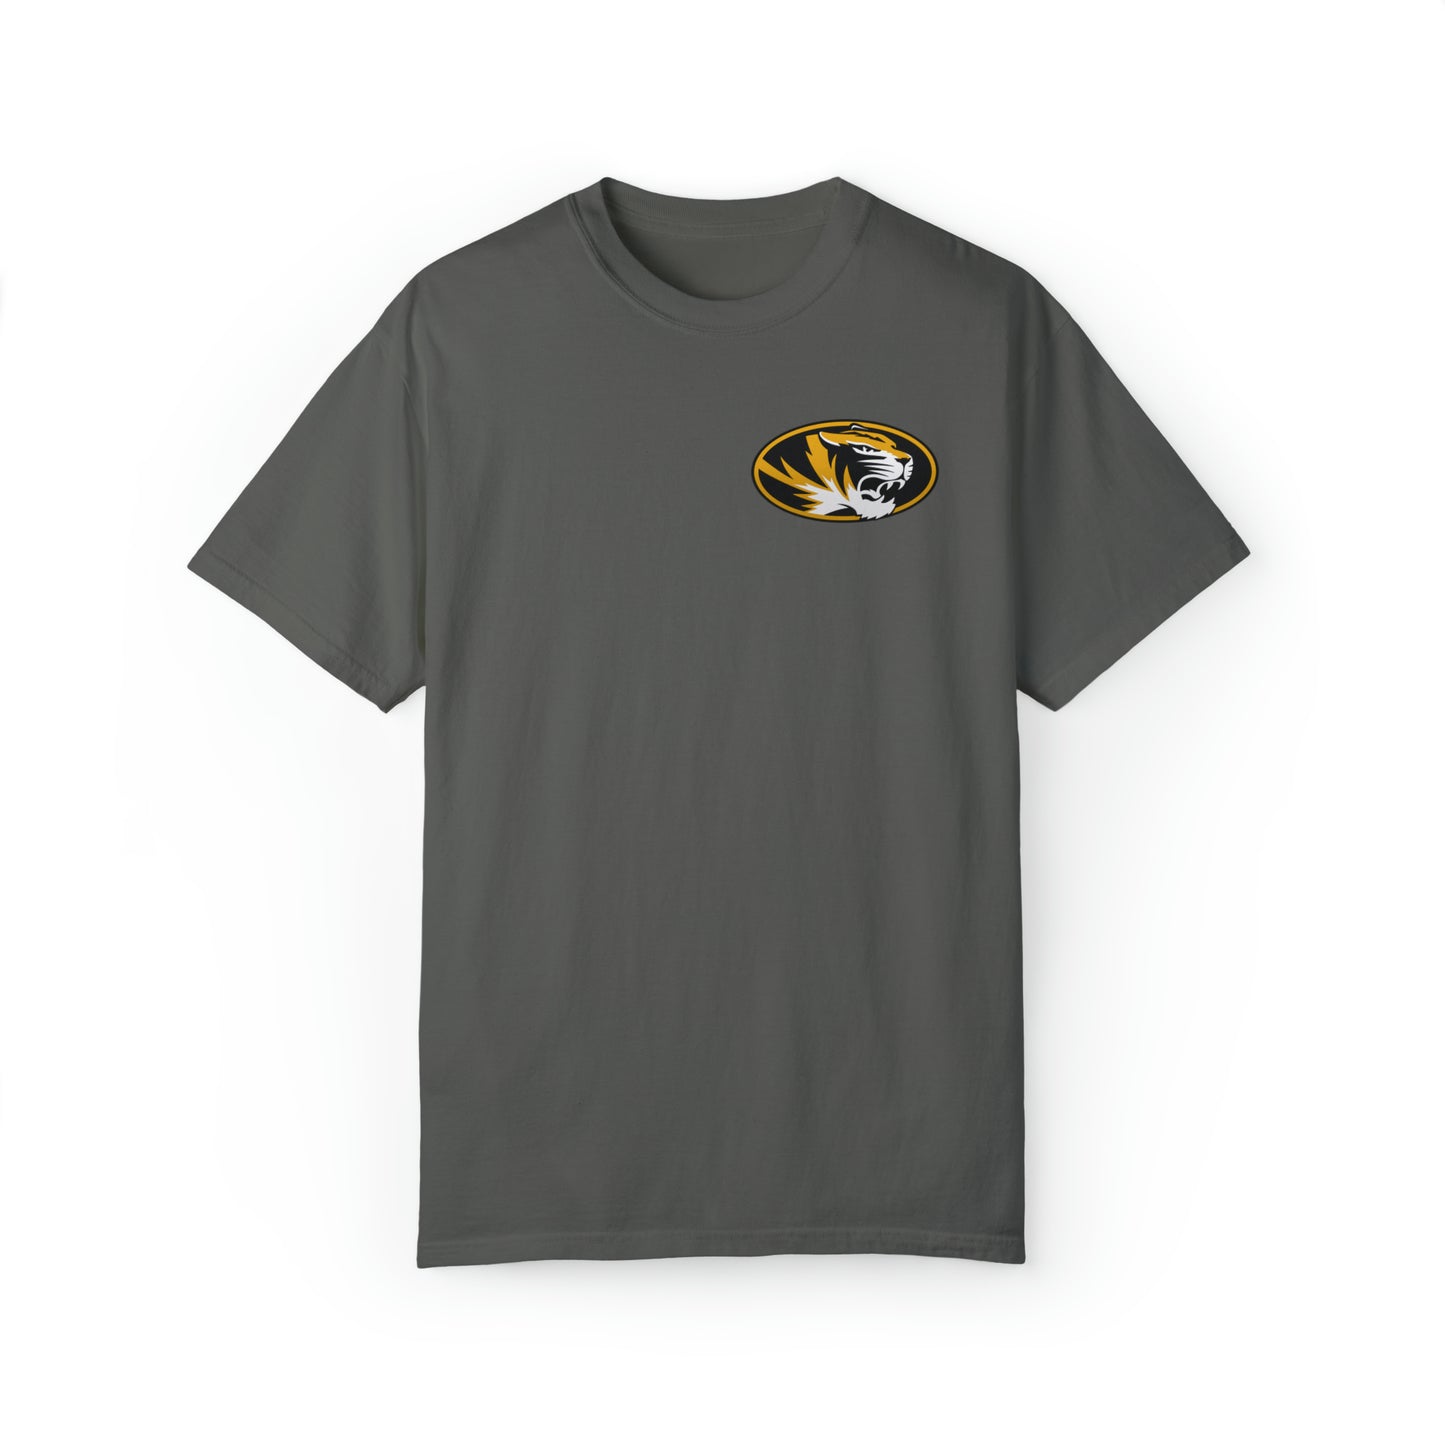 Mizzou Tigers Game Day Shirt